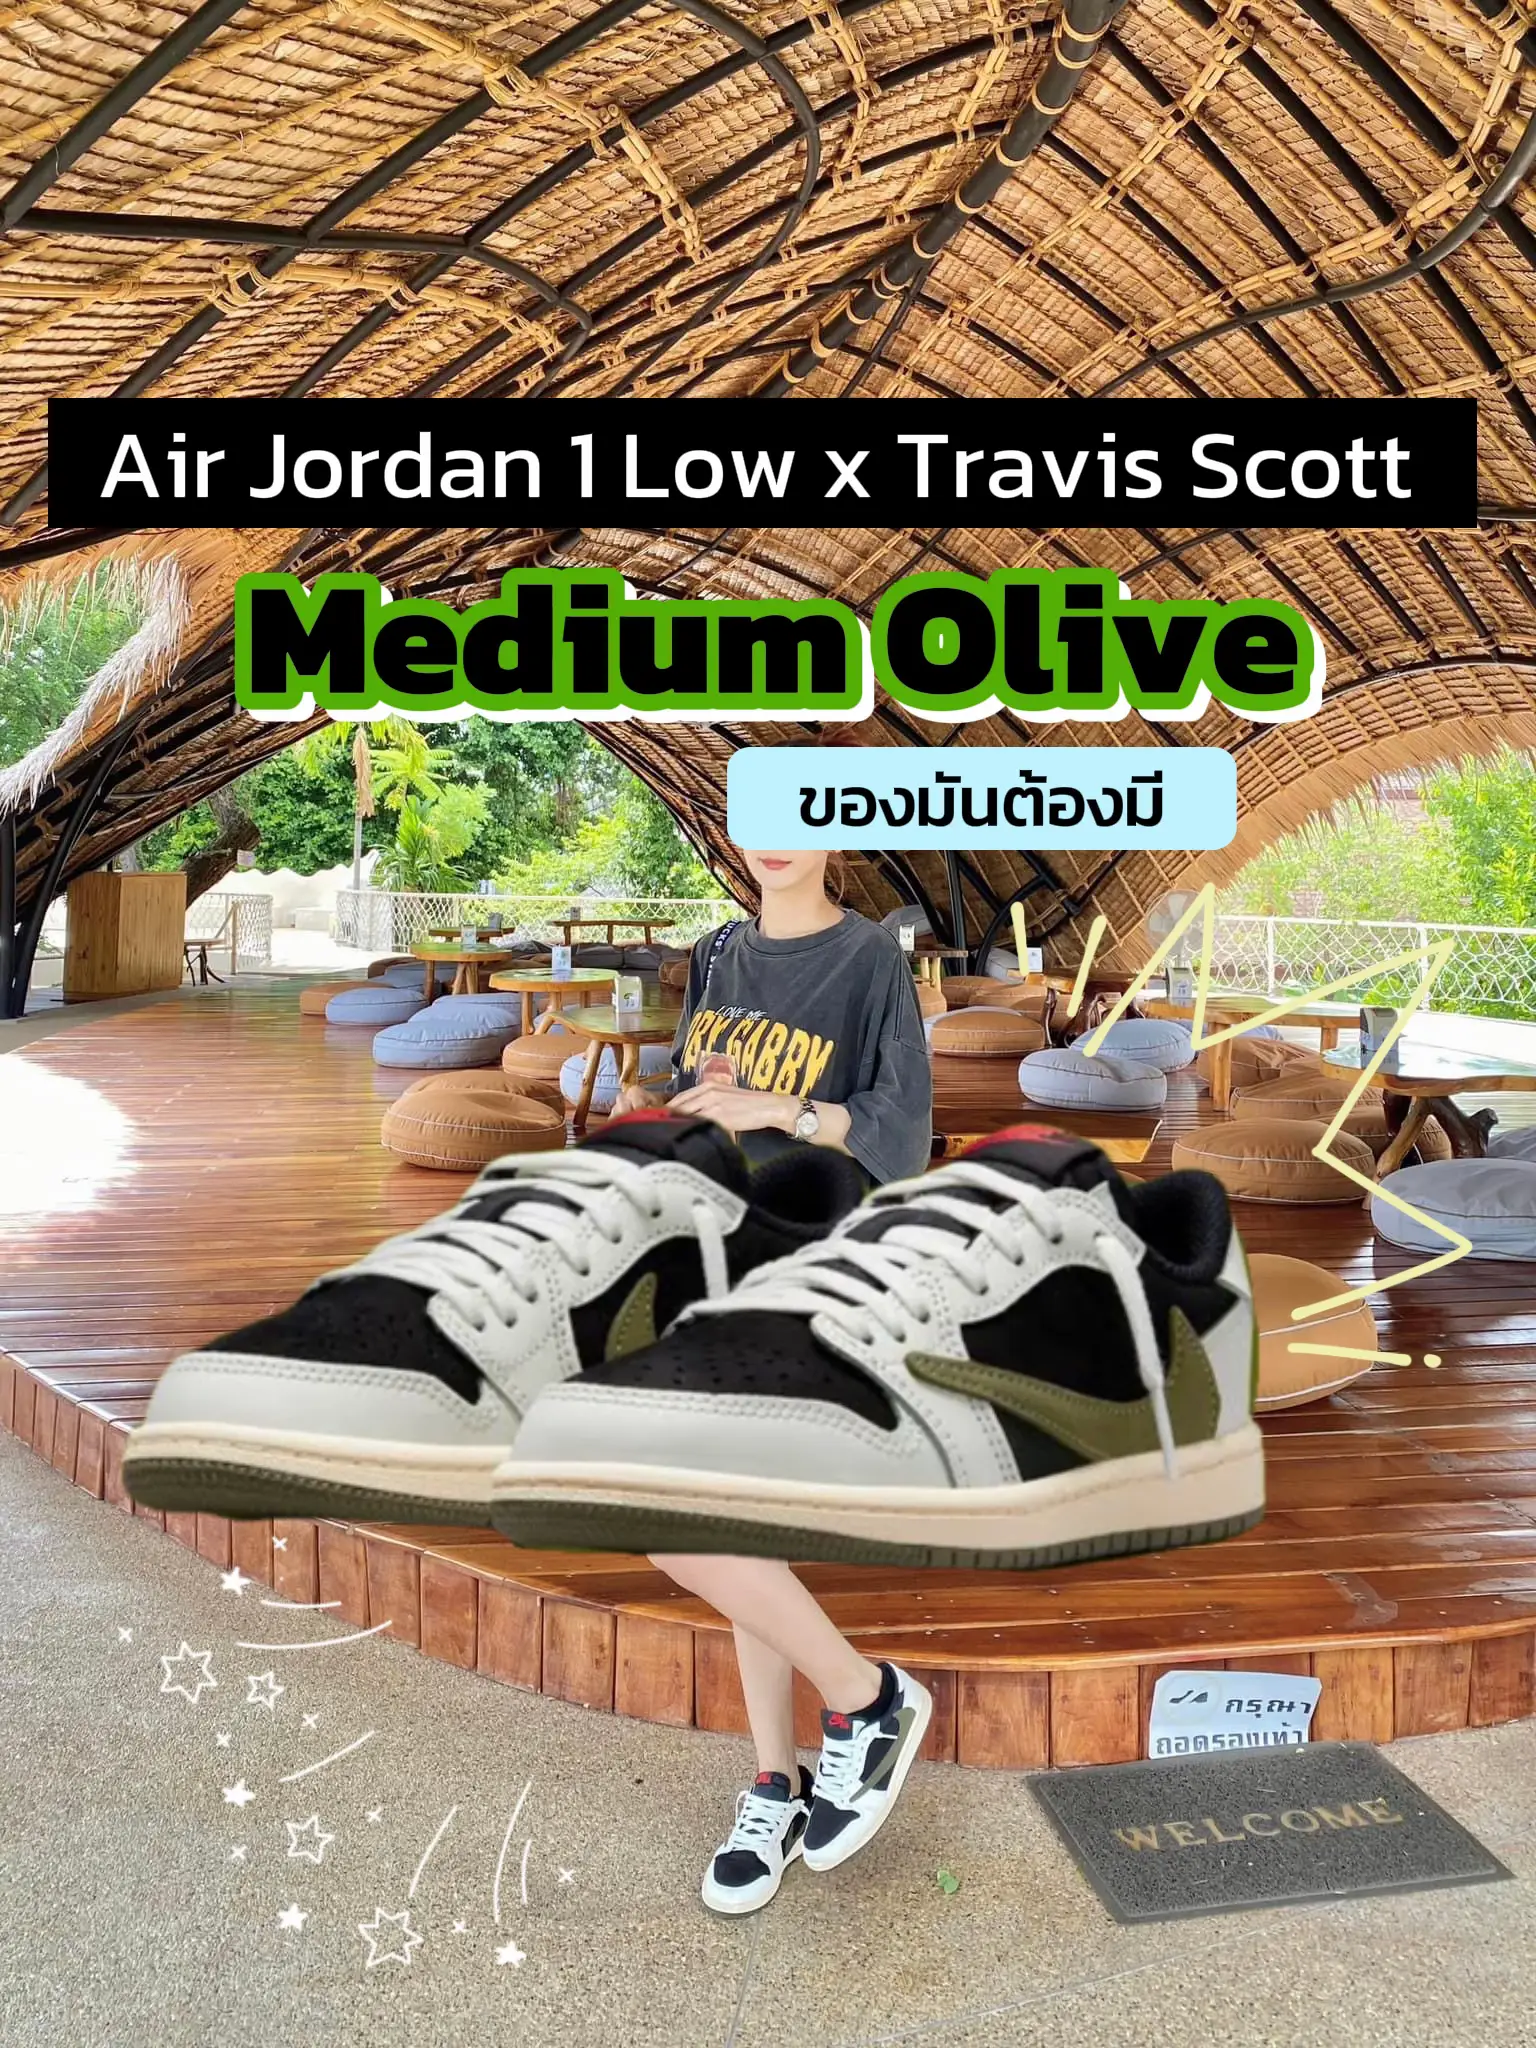 Air Jordan 1 Low x Travis Scott Medium Olive | Gallery